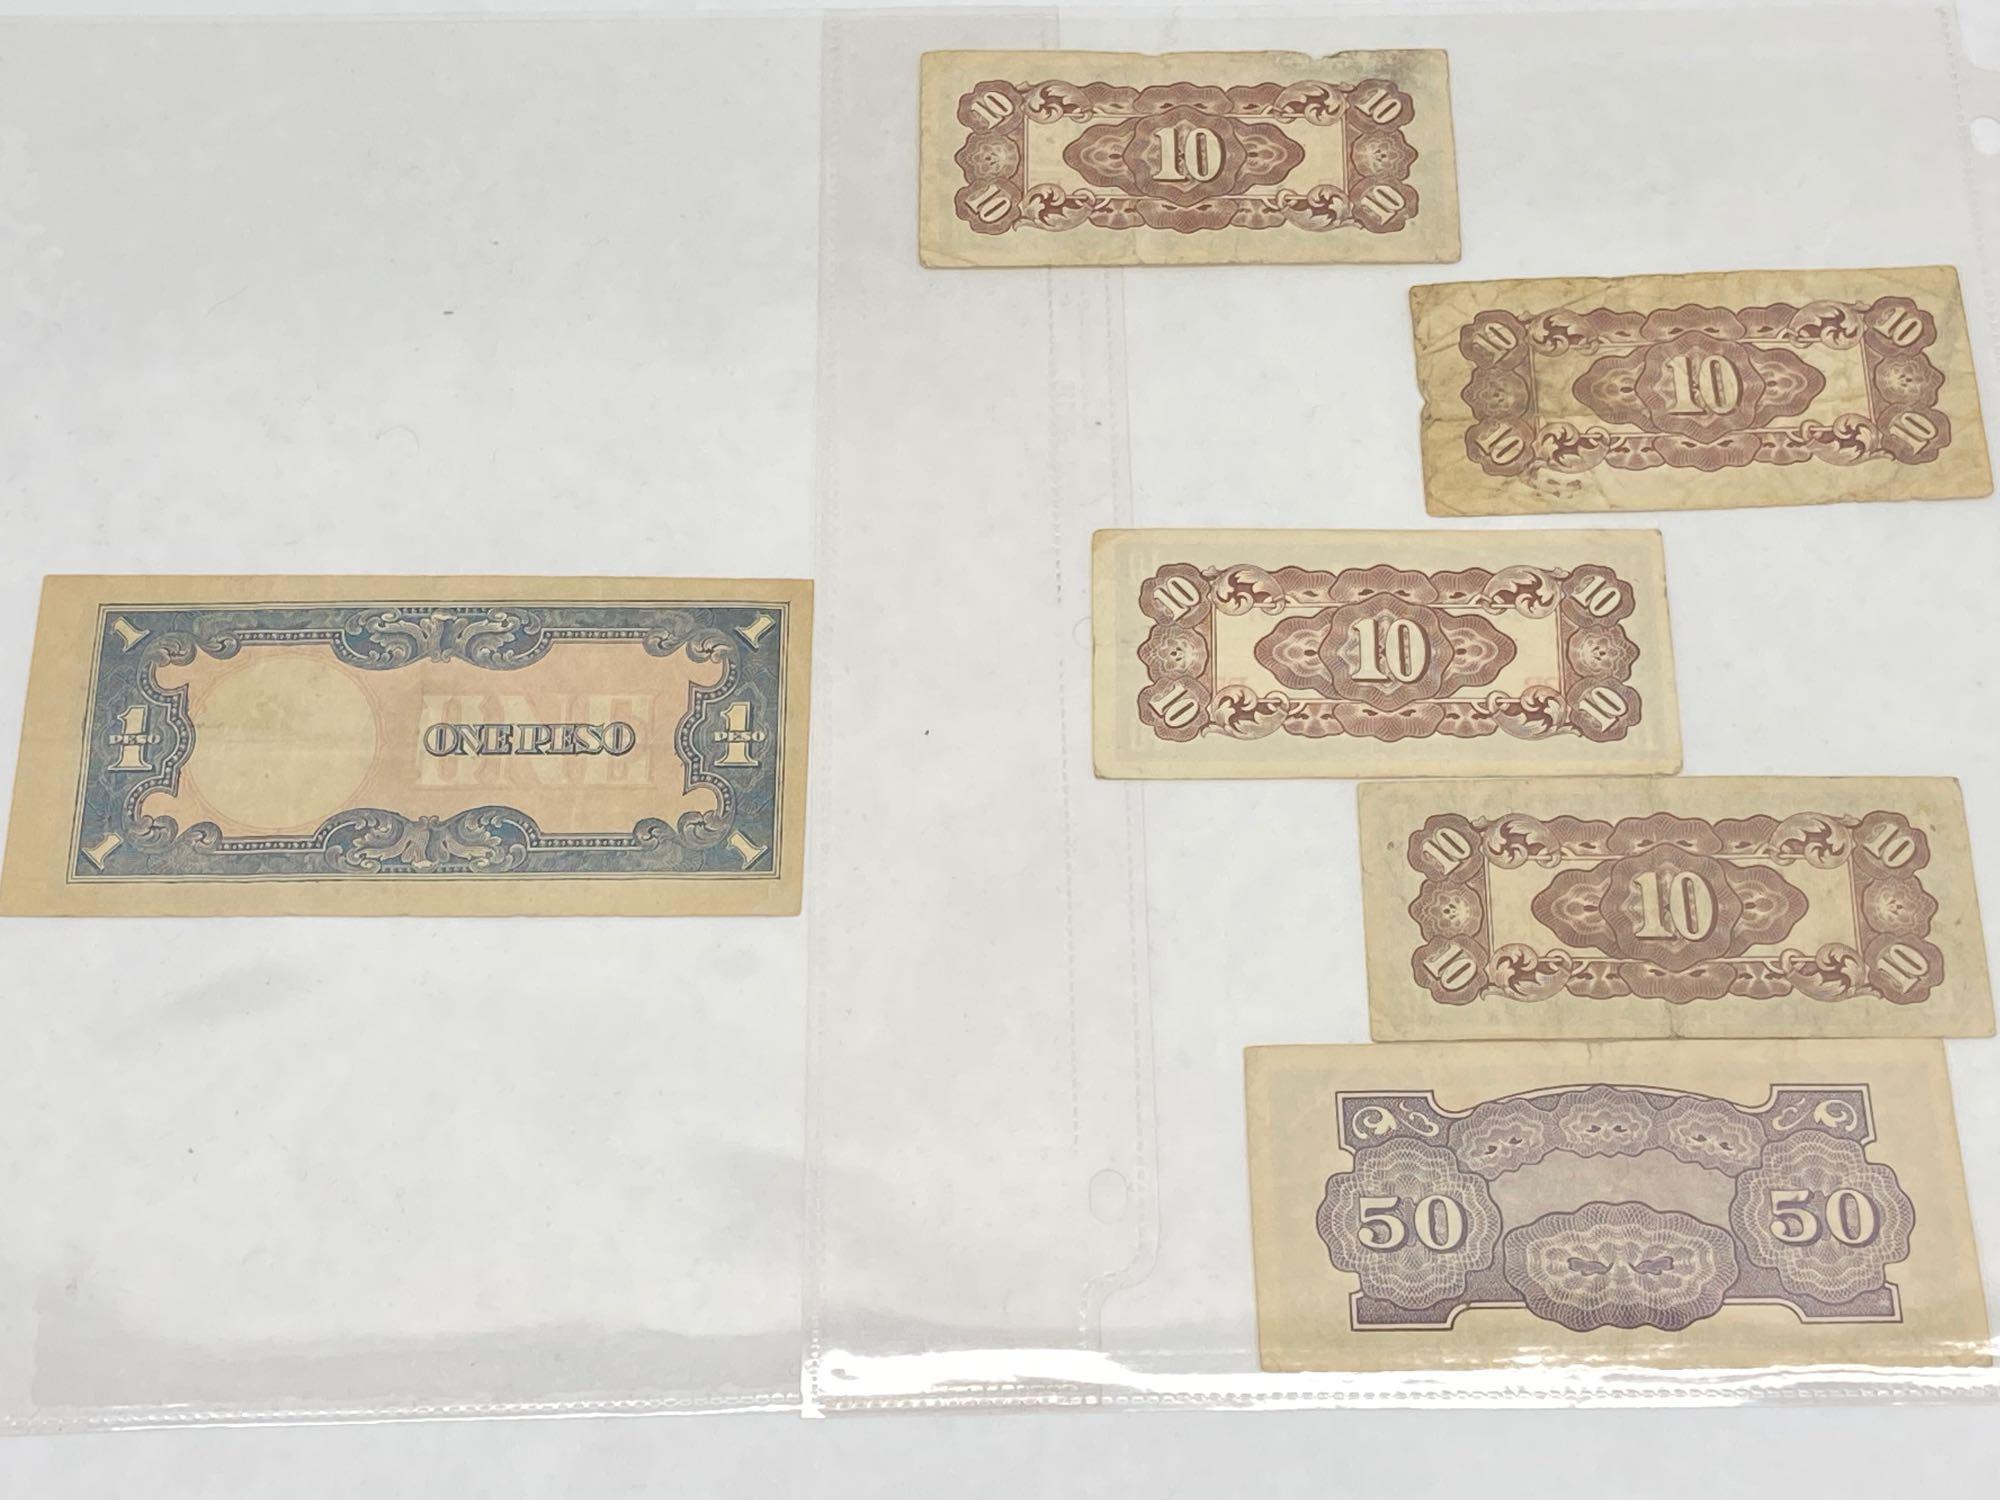 WW2 Era Japanese occupied Philippines paper money, 6 Units